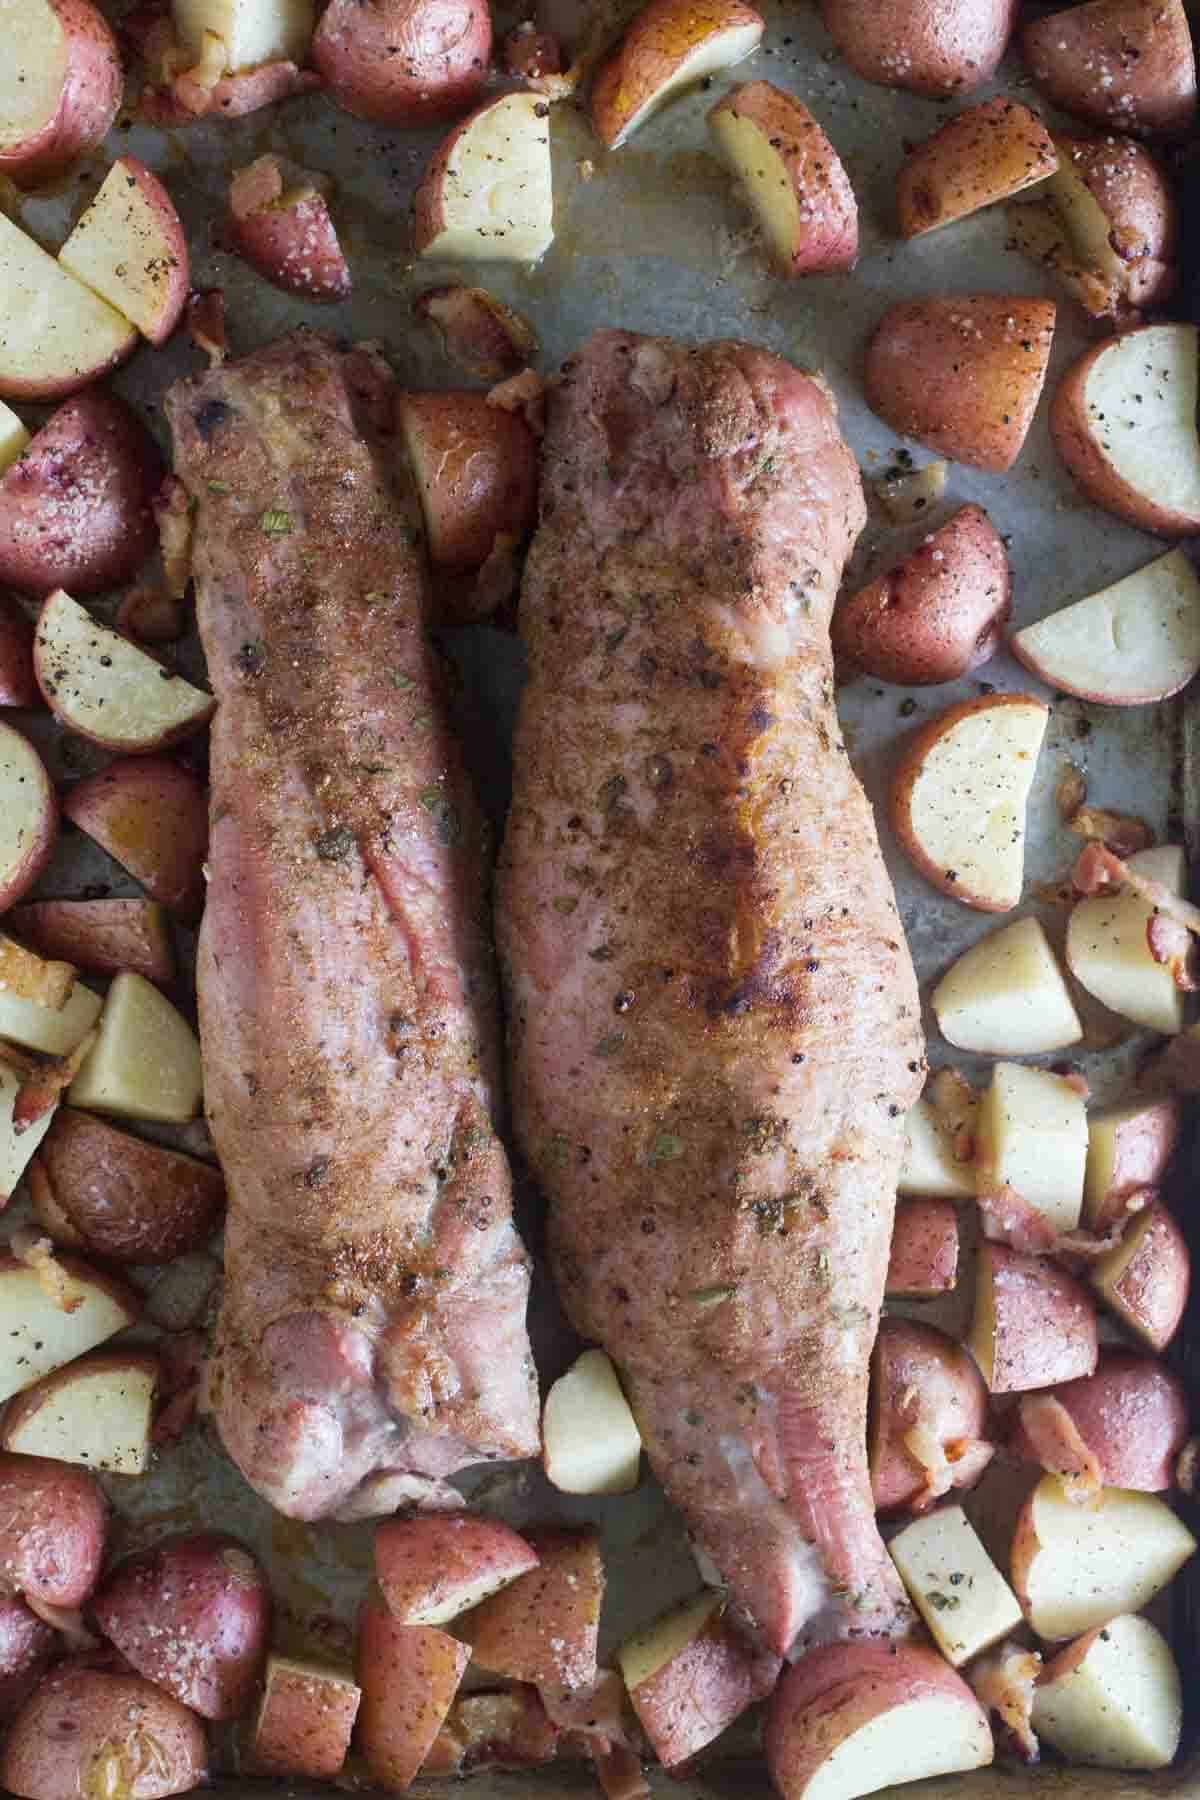 Two pork tenderloins with potatoes on a baking sheet.